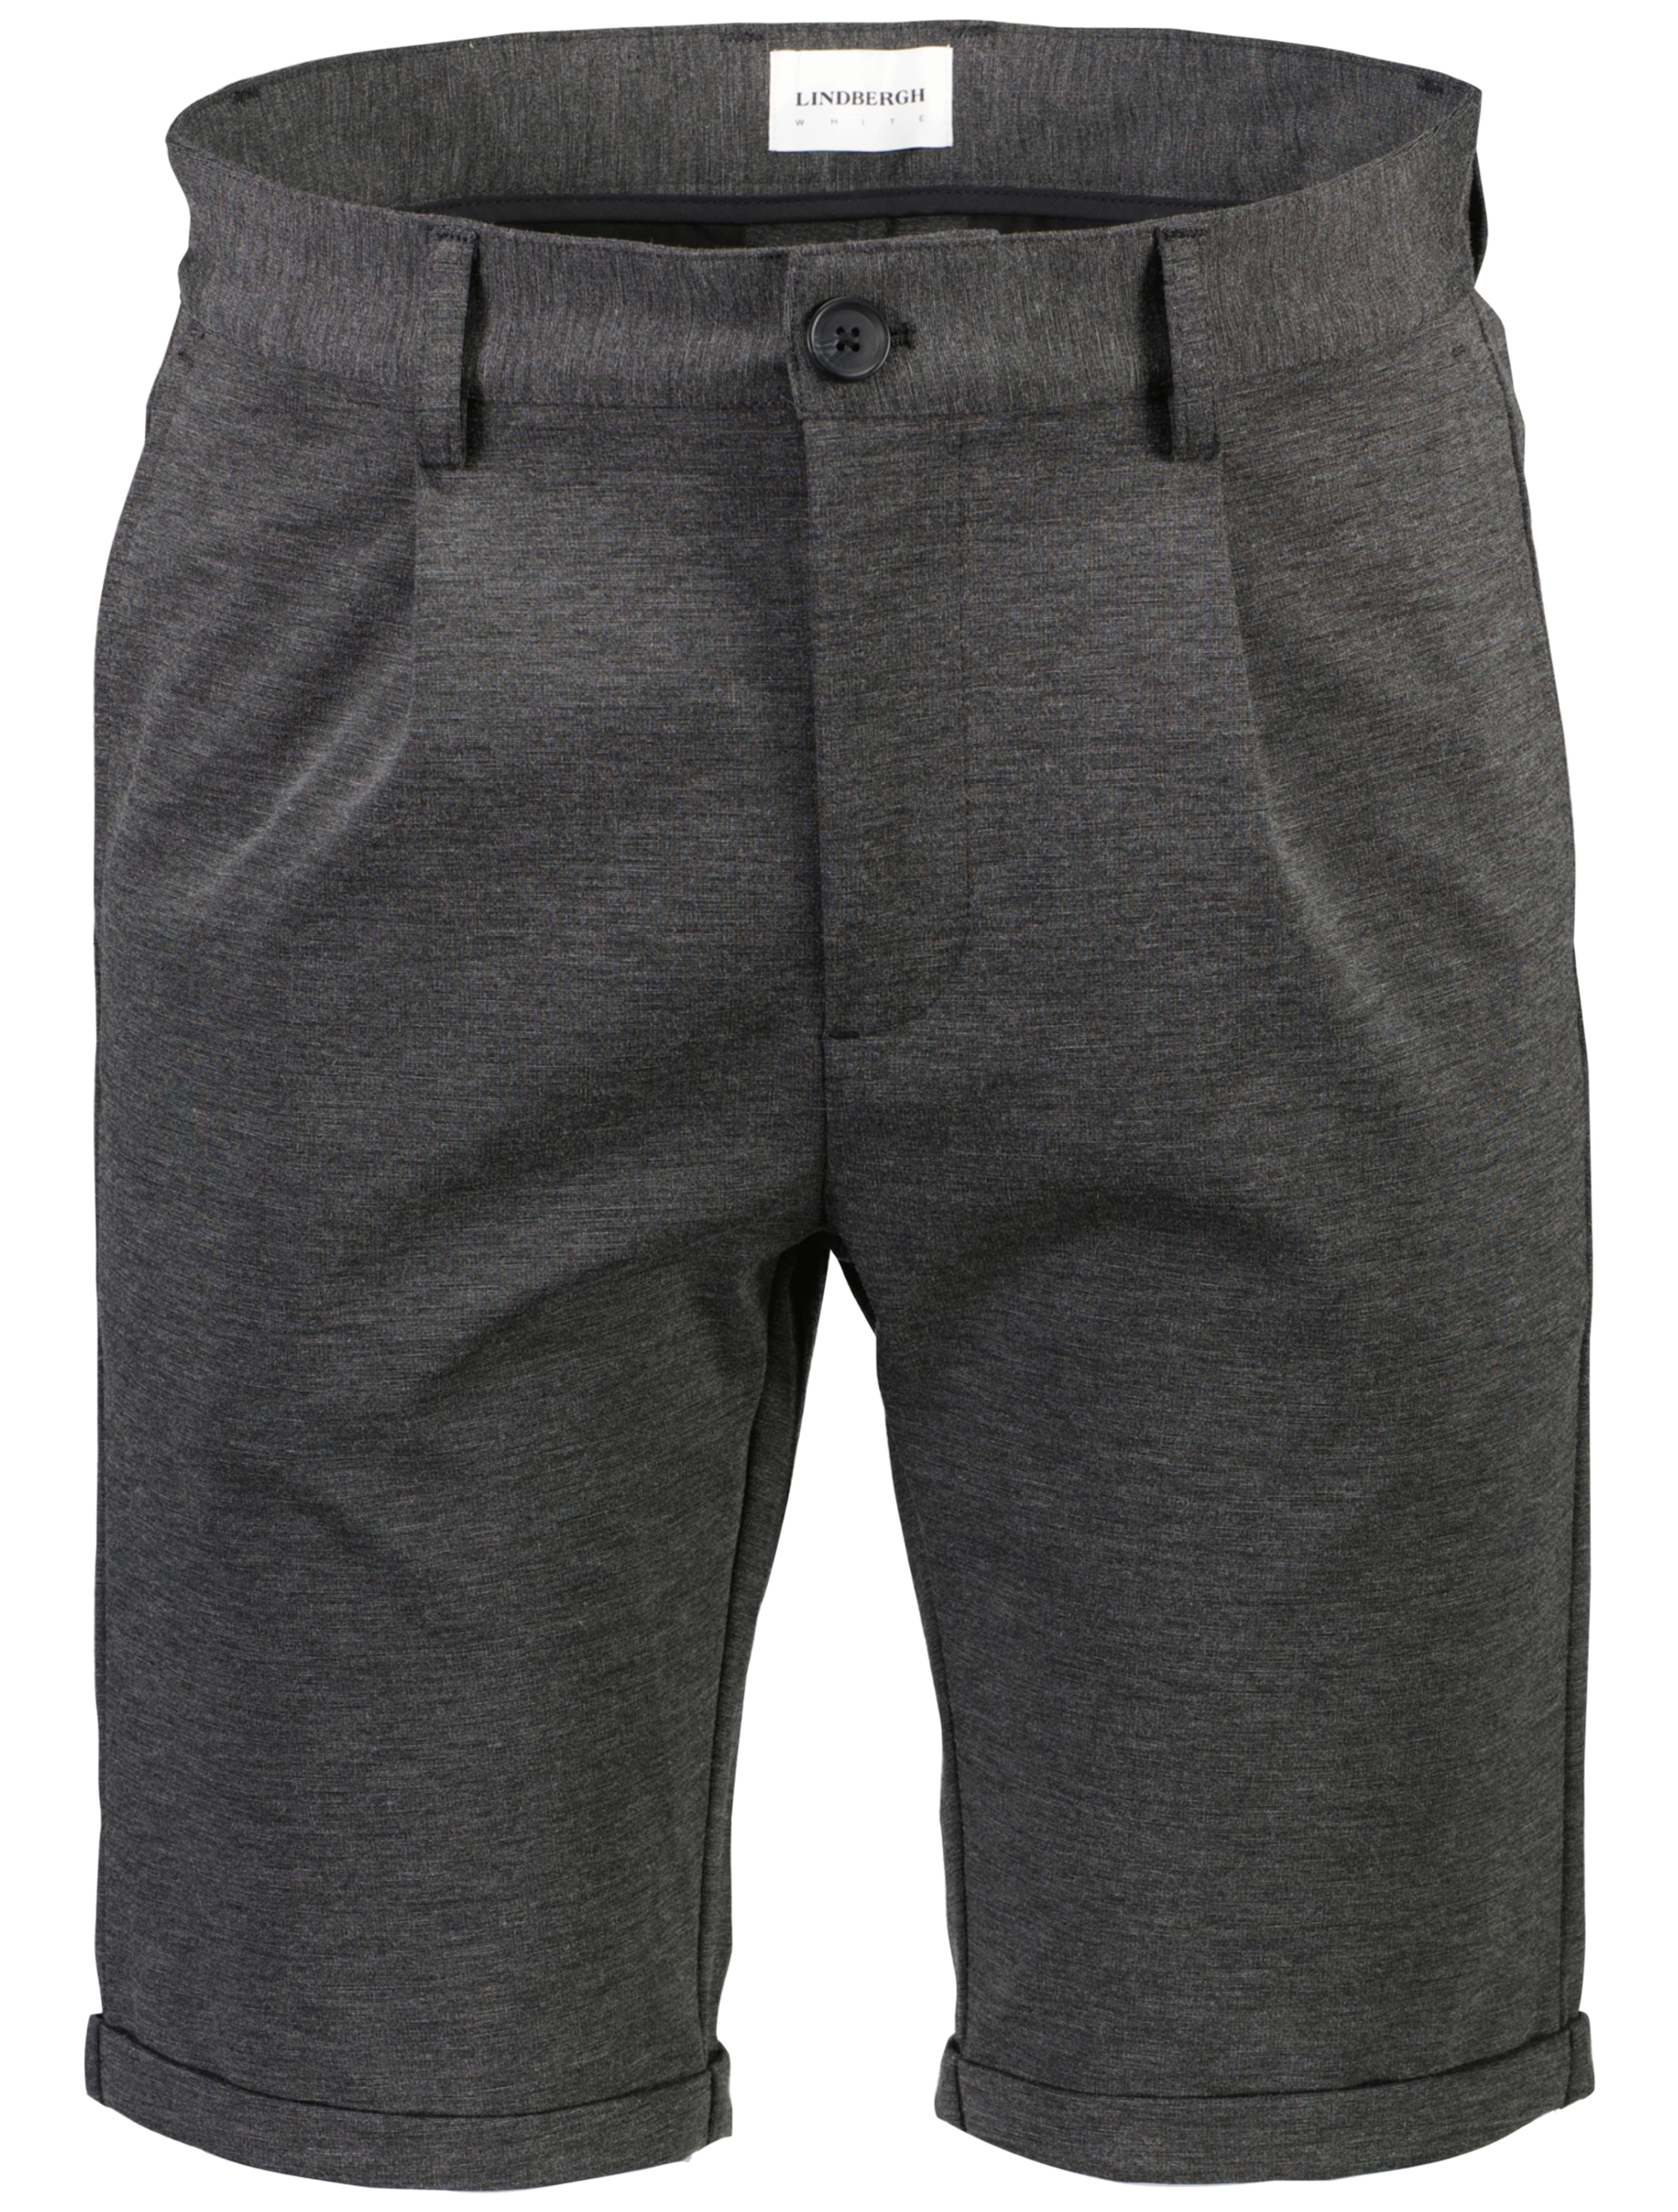 Lindbergh Pantalon korte broek grijs / charcoal mel